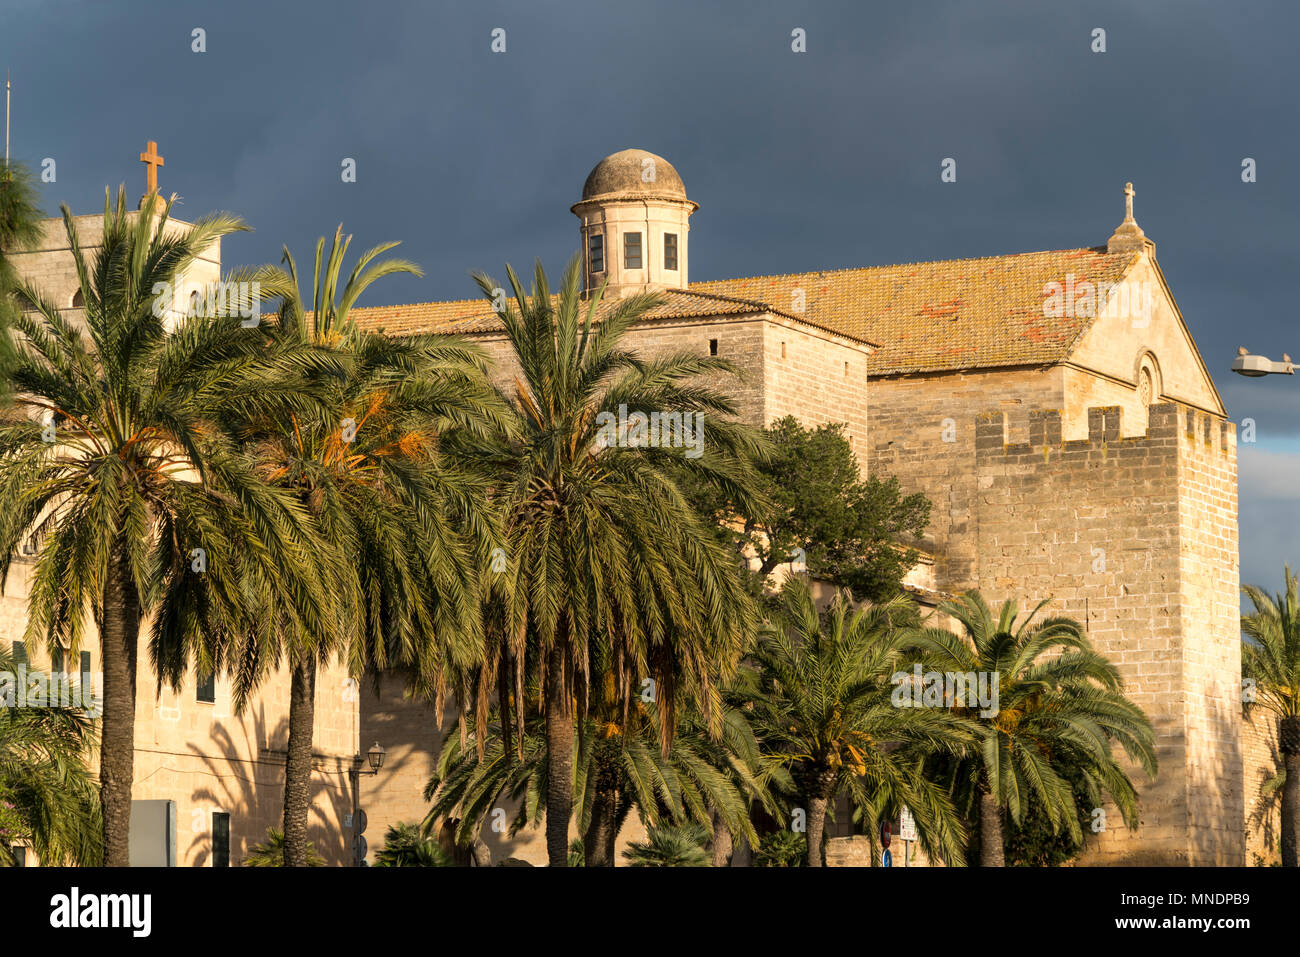 Kirche Esglesia de Sant Jaume, Alcudia Maiorca Balearen, Spanien | chiesa Esglesia de Sant Jaume, Maiorca, isole Baleari, Spagna, Foto Stock